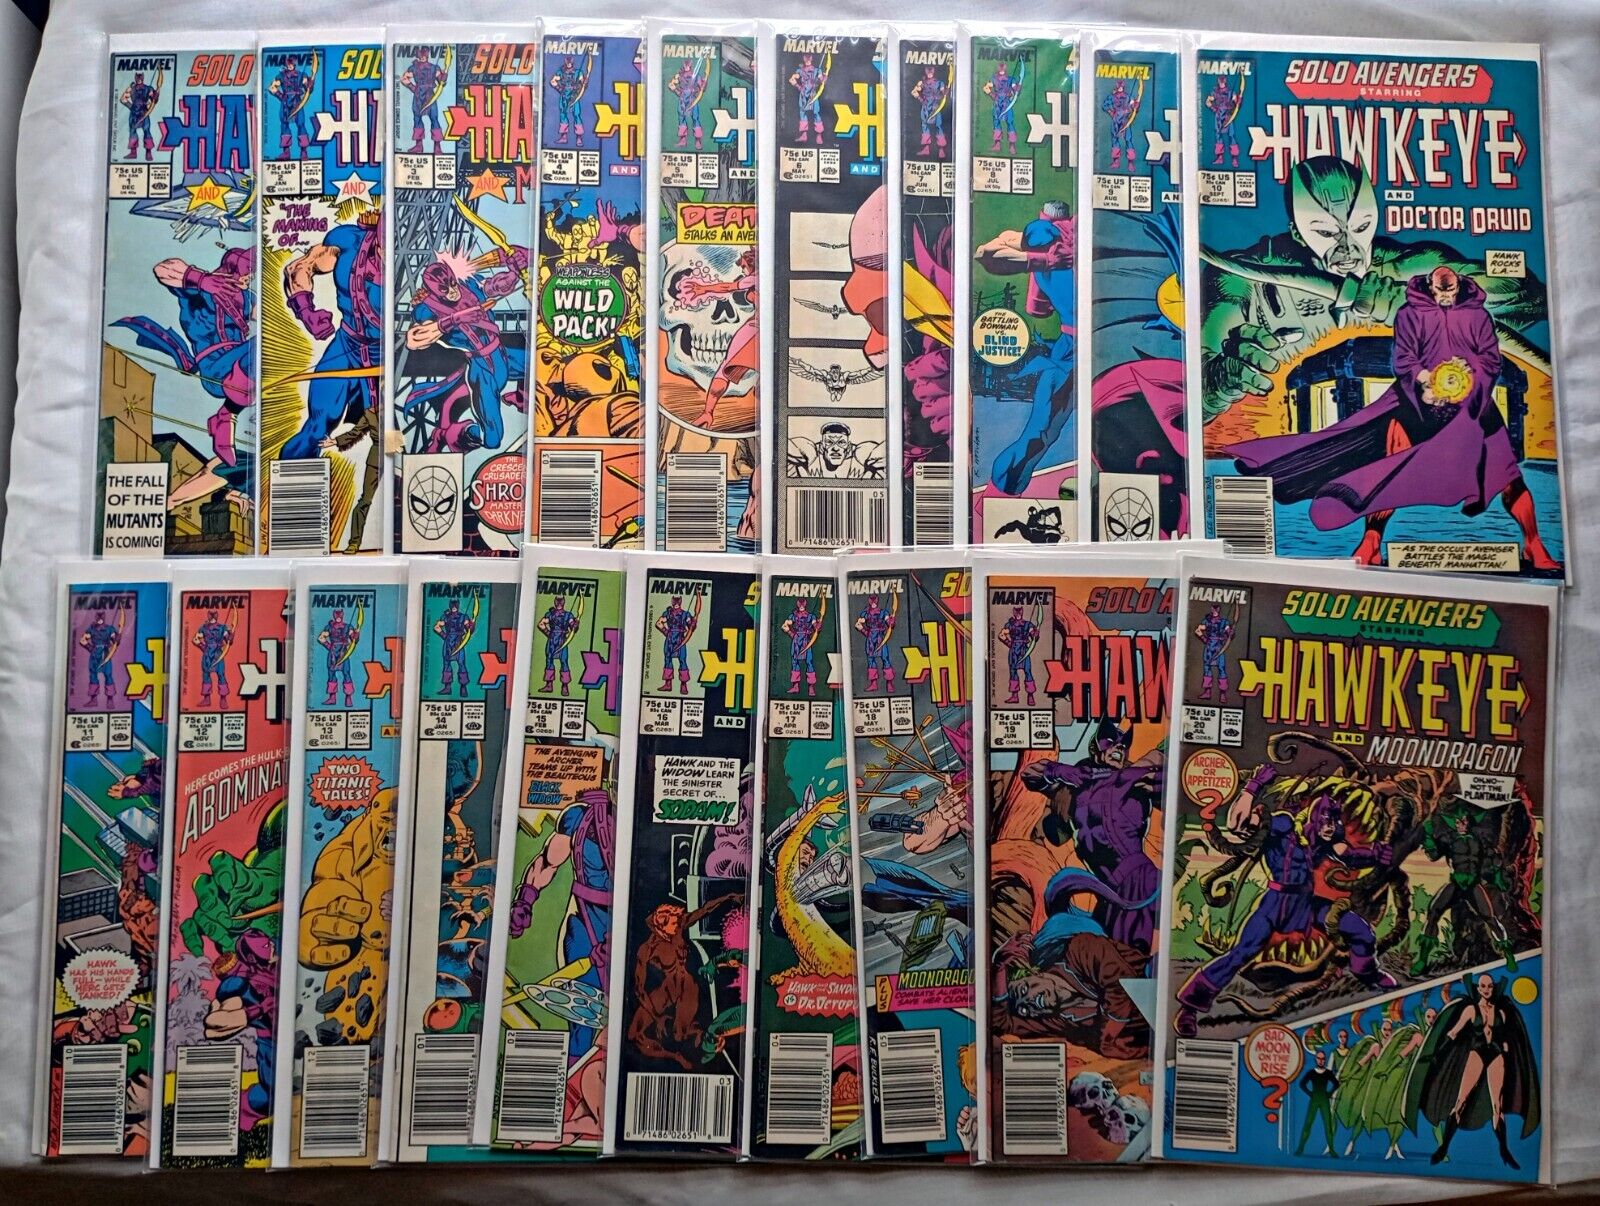 Solo Avengers Hawkeye #1-20, Marvel 1987 Complete Run